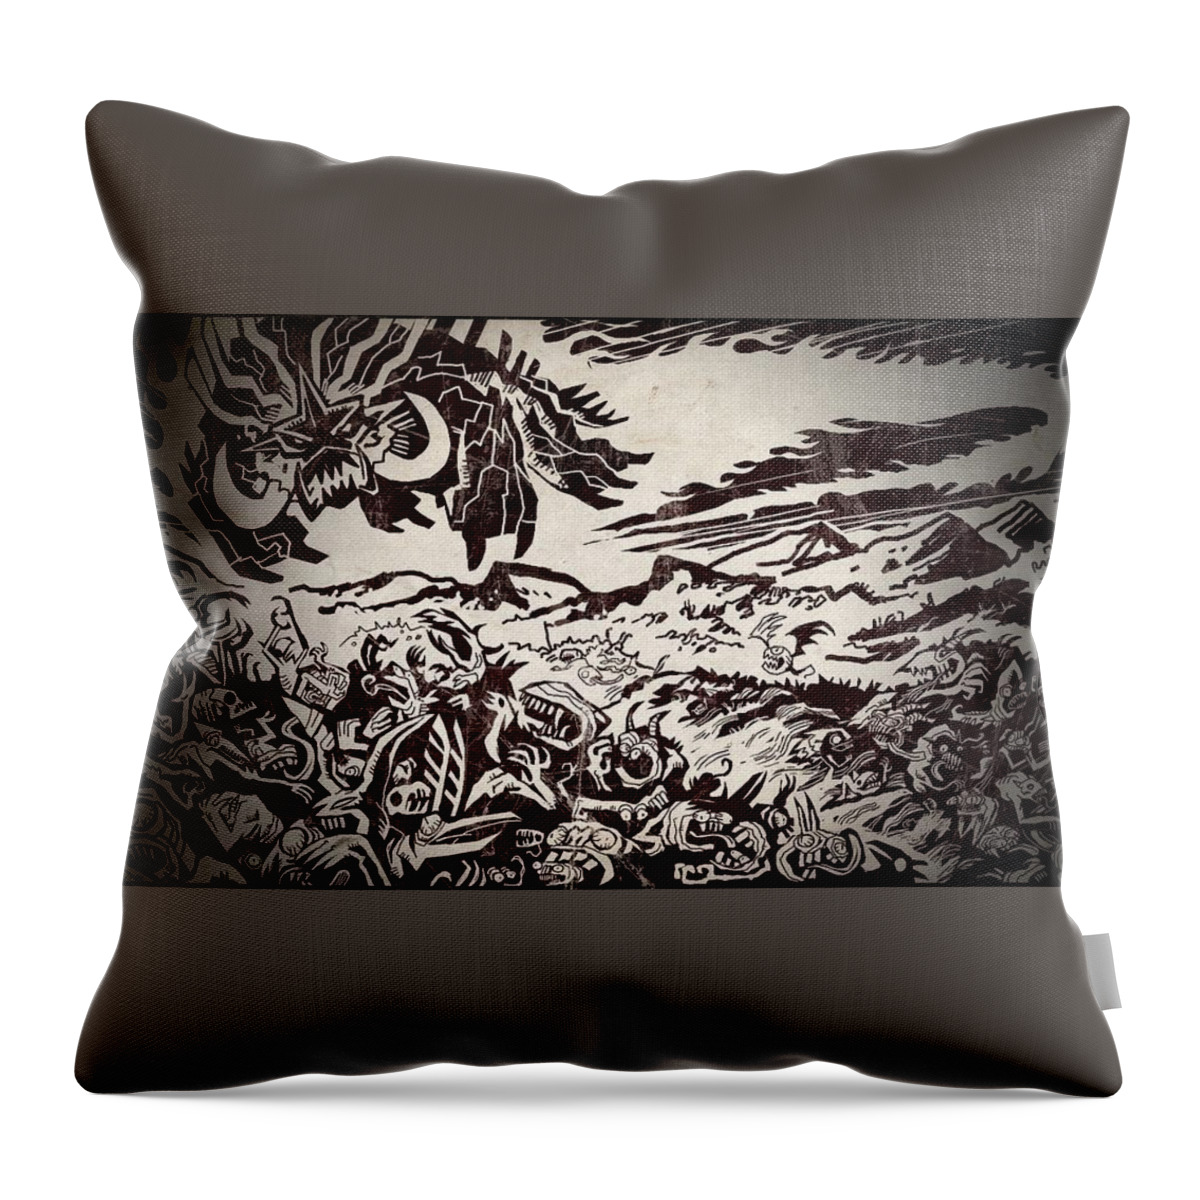 Brutal Legend Throw Pillow featuring the digital art Brutal Legend by Super Lovely